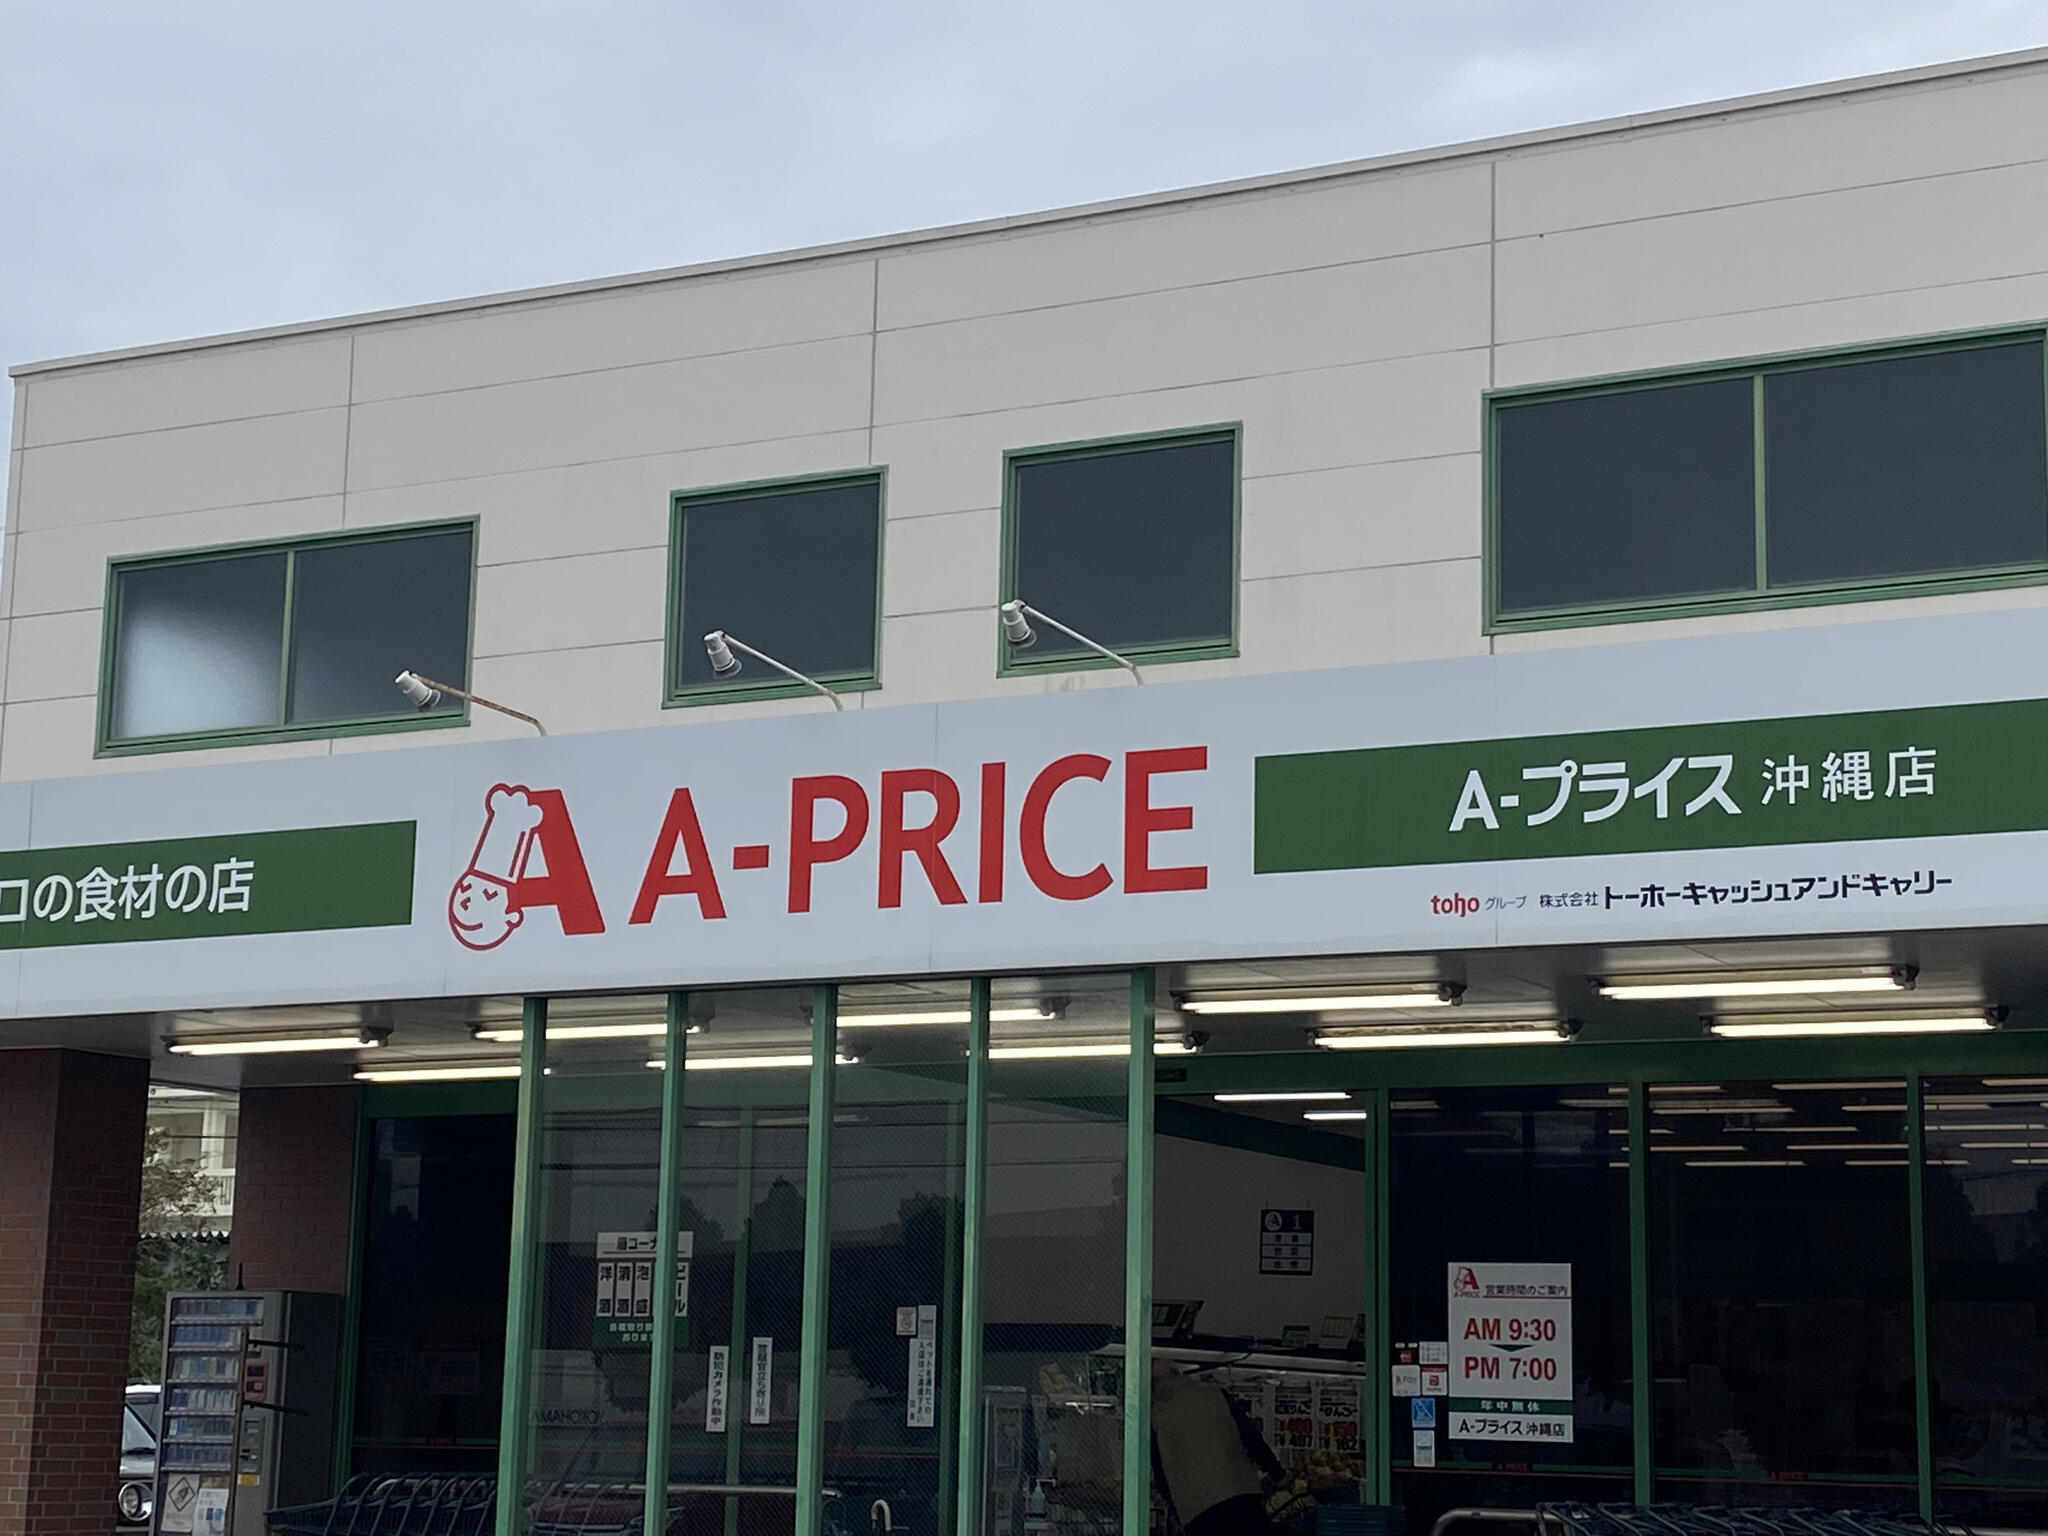 A-プライス 沖縄店の代表写真3